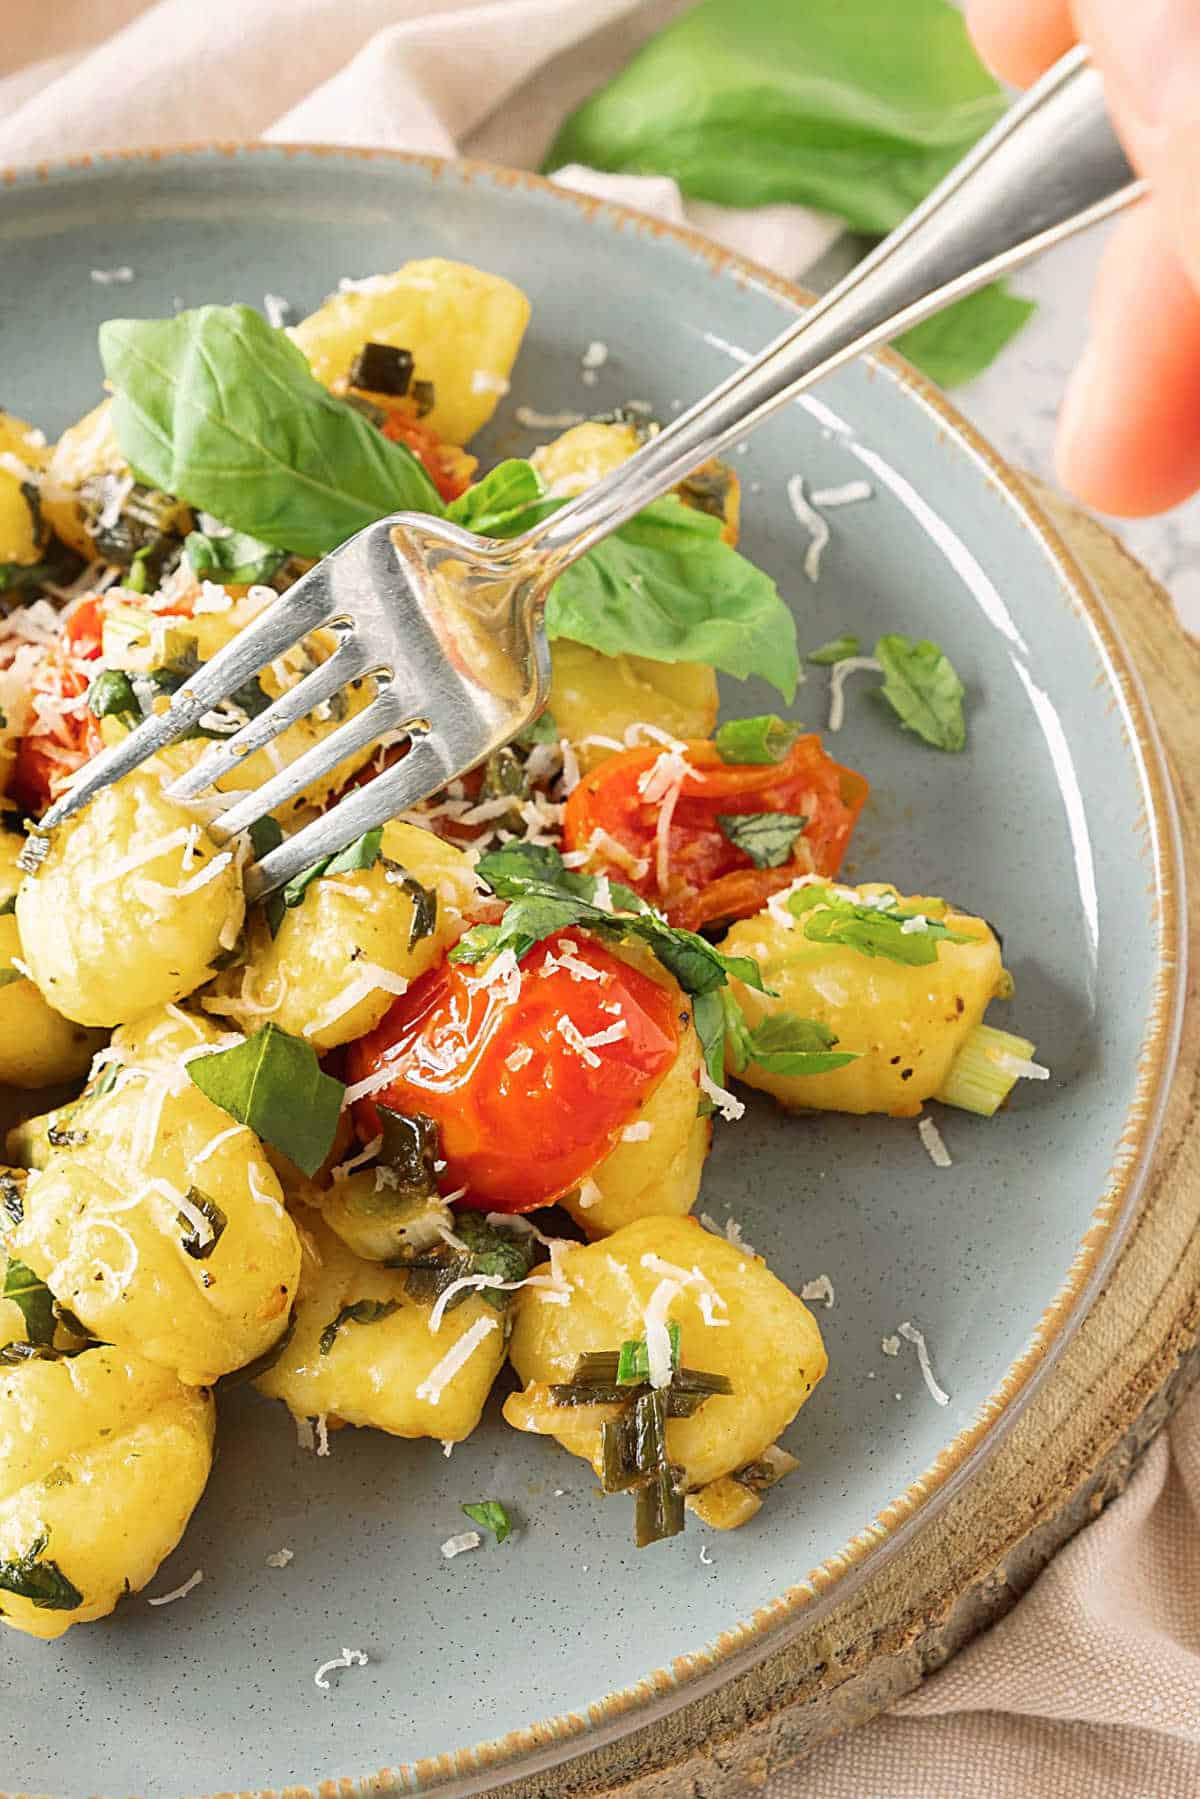 Forking tomato basil potato gnocchi on a grey plate.